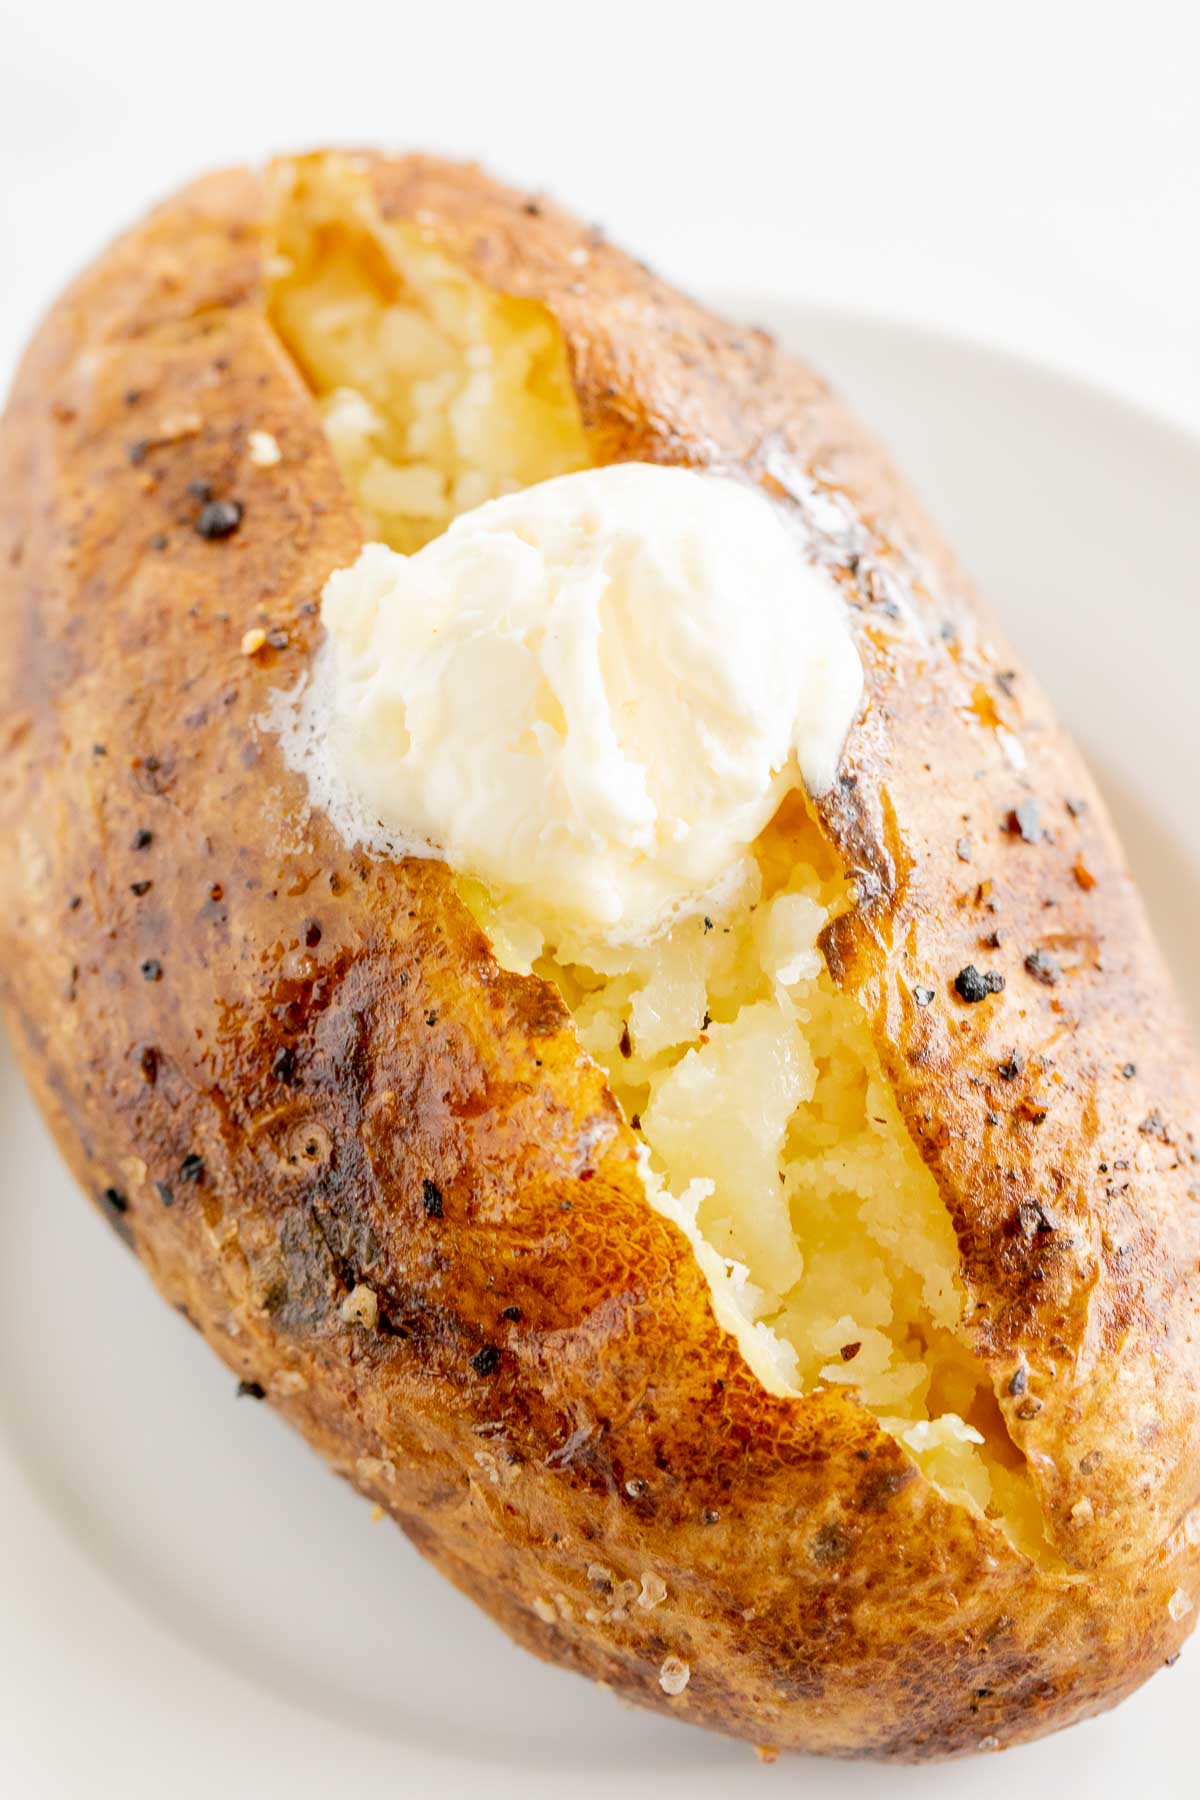 A baked potato on a white plate